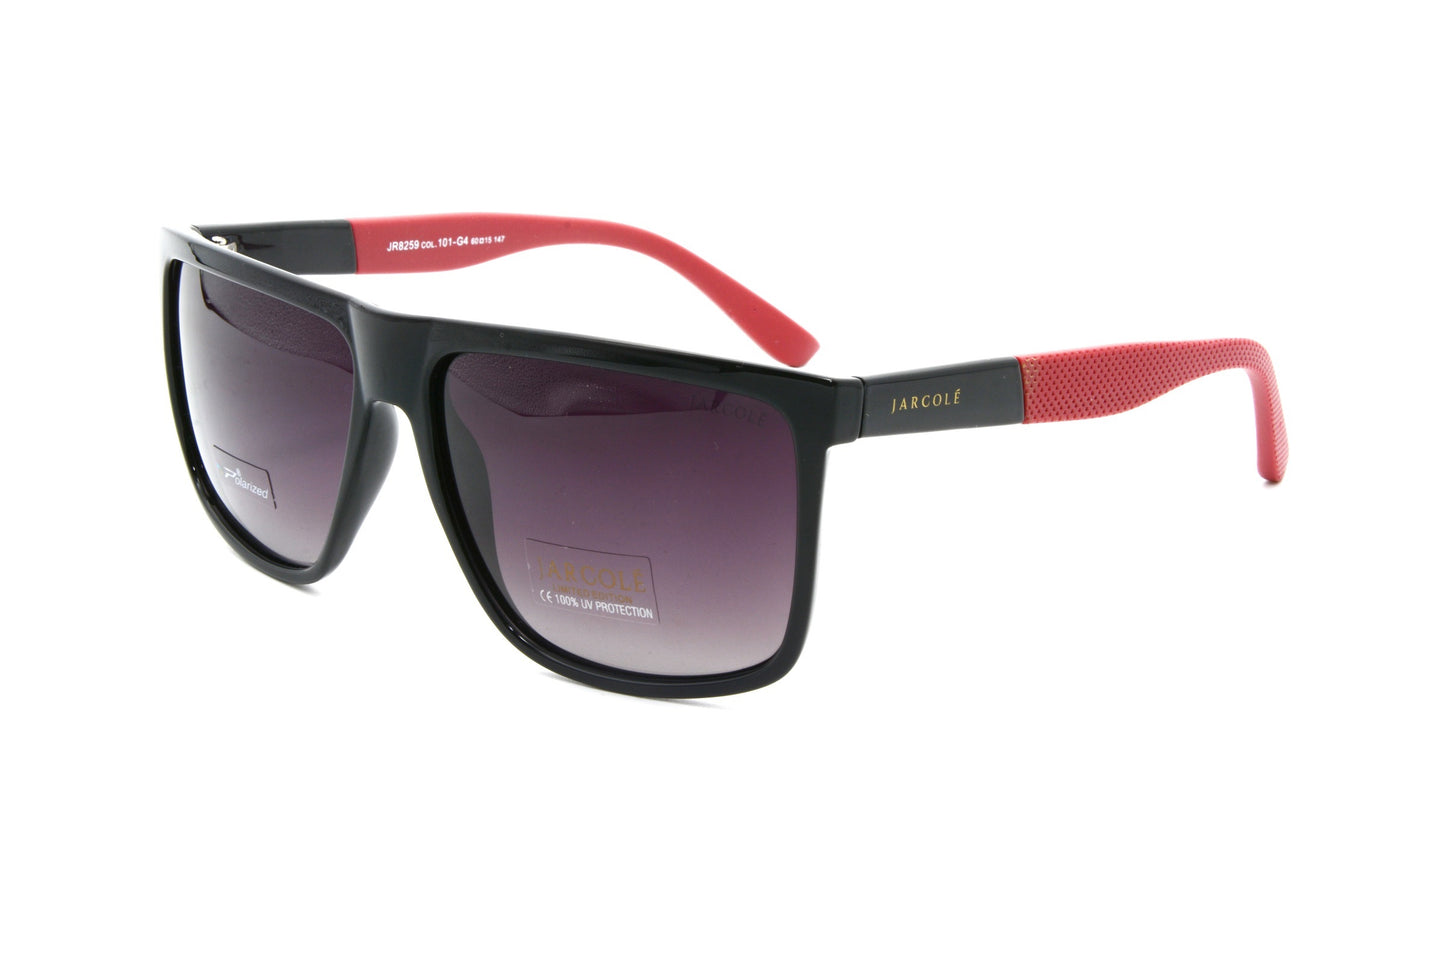 Jarcole sunglasses JR8259 101-G4